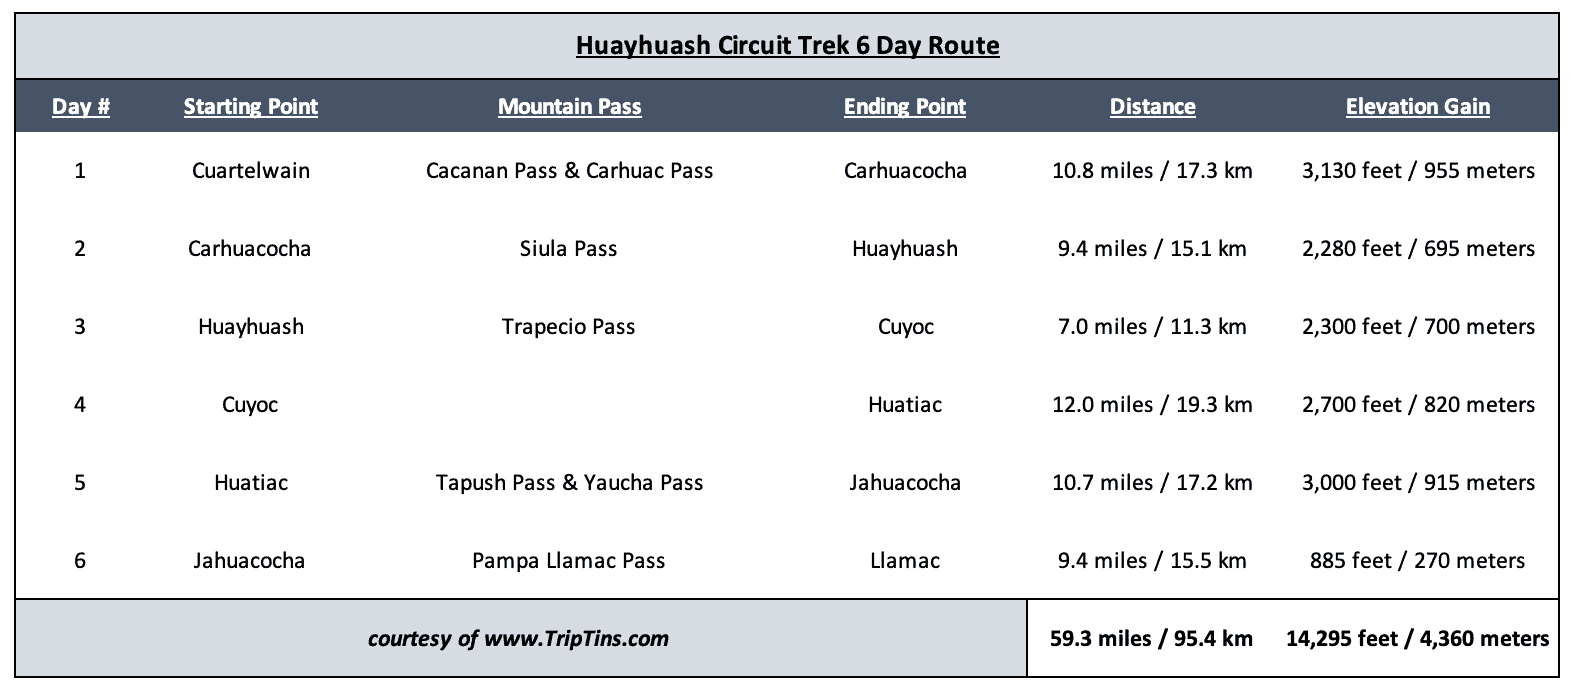 Huayhuash Circuit 6 Day